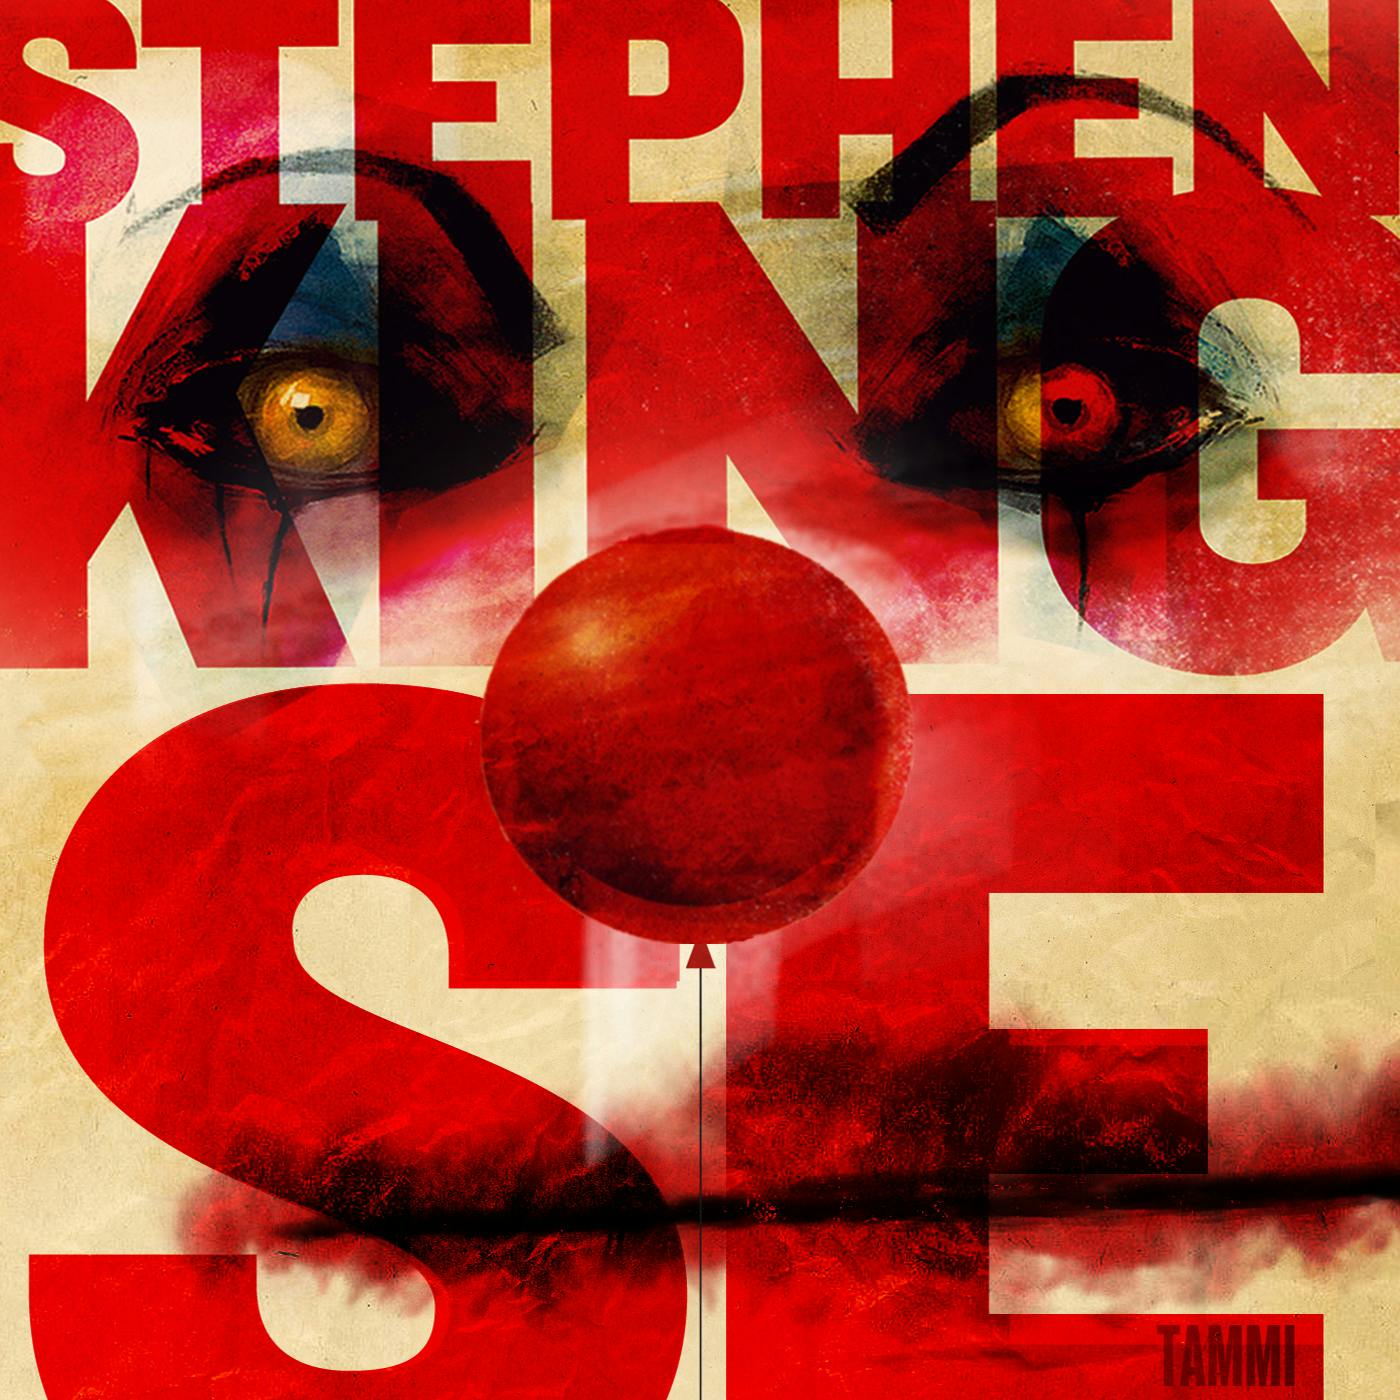 Se - Stephen King